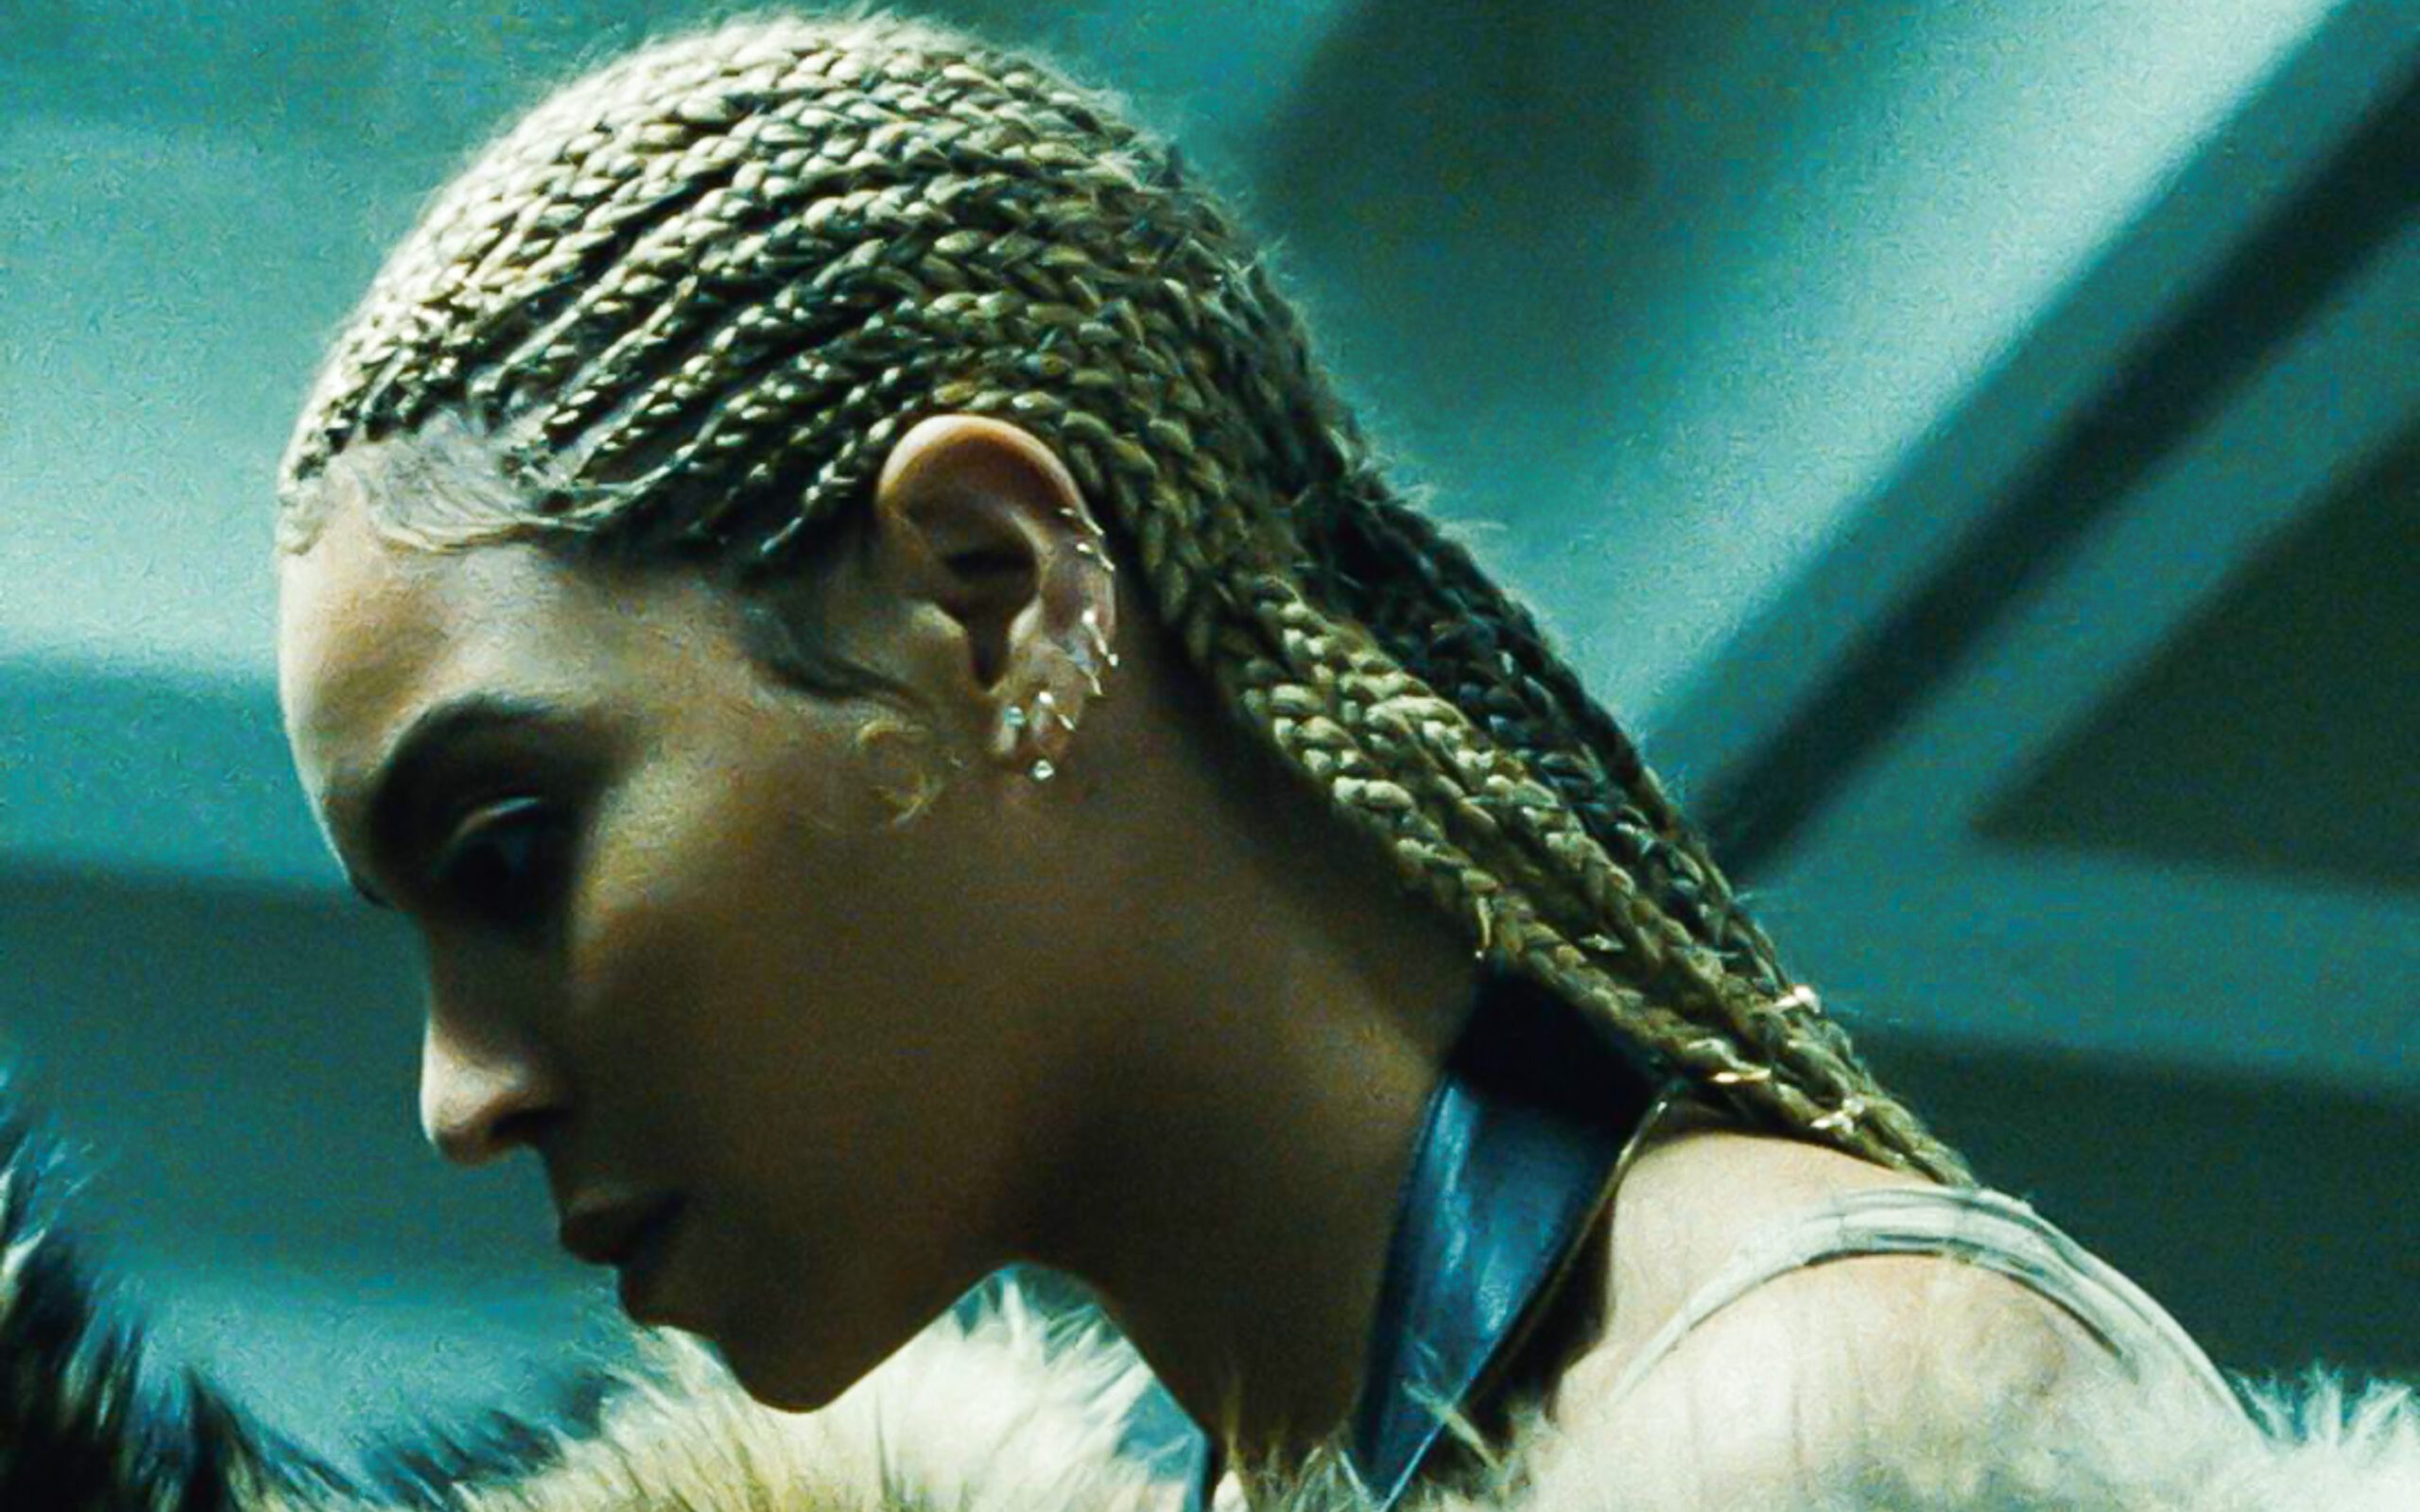 Tidal soars on Beyonce’s ‘Lemonade’